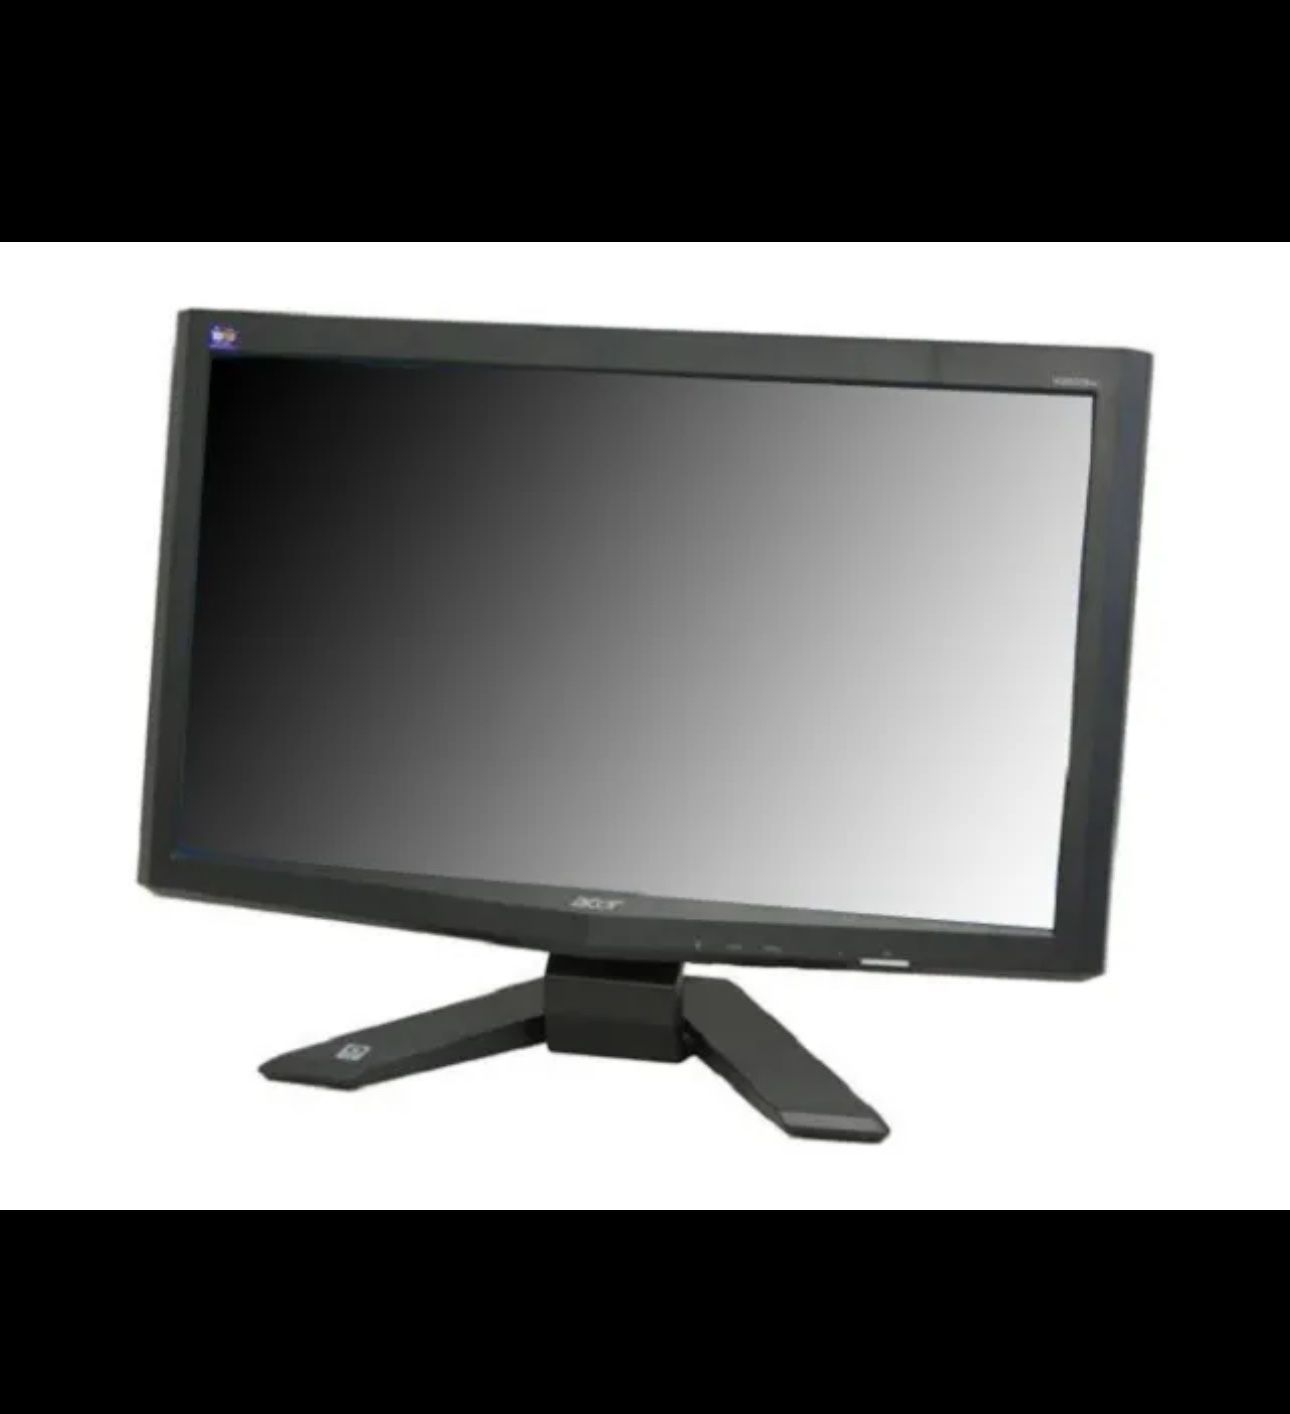 Acer X203h Monitor 20inch Display VGA DVI 